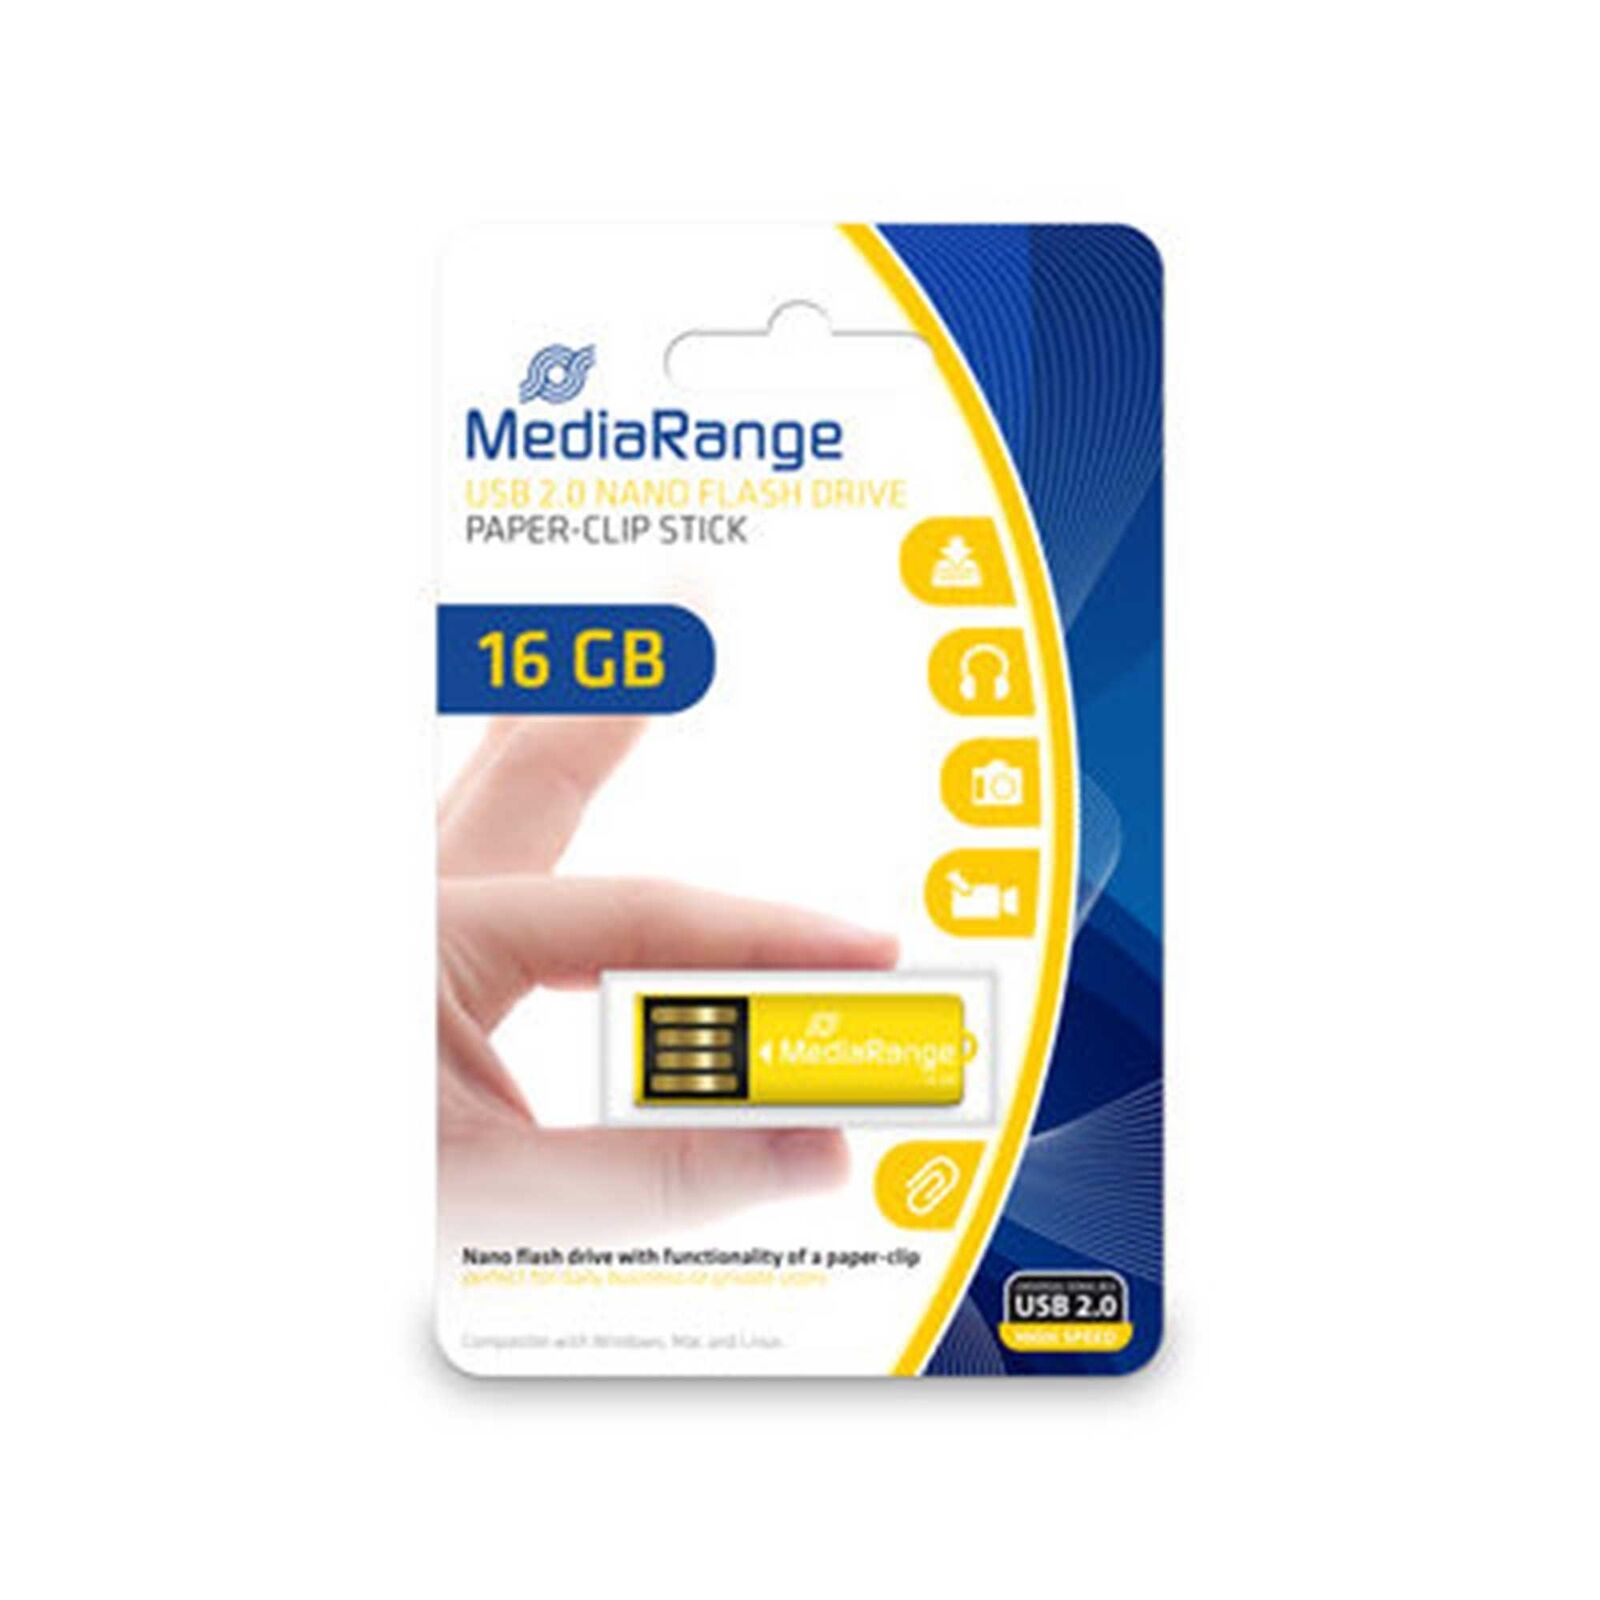 MediaRange MR976 Nano USB Stick 16GB yellow with paper clip function 16 GB